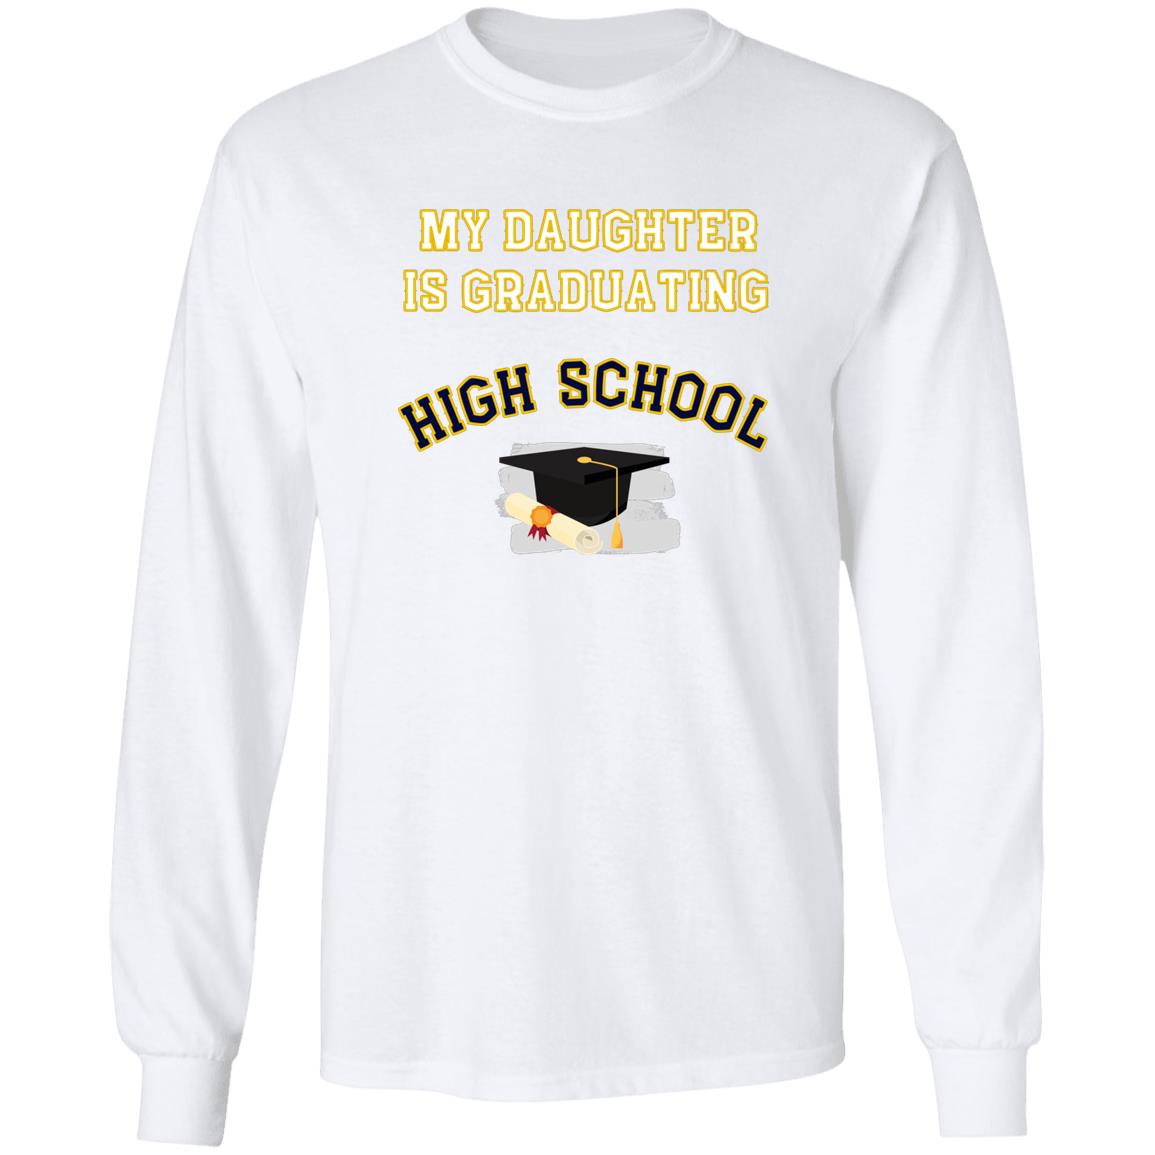 Daughter is Graduating High School LS Ultra Cotton T-Shirt